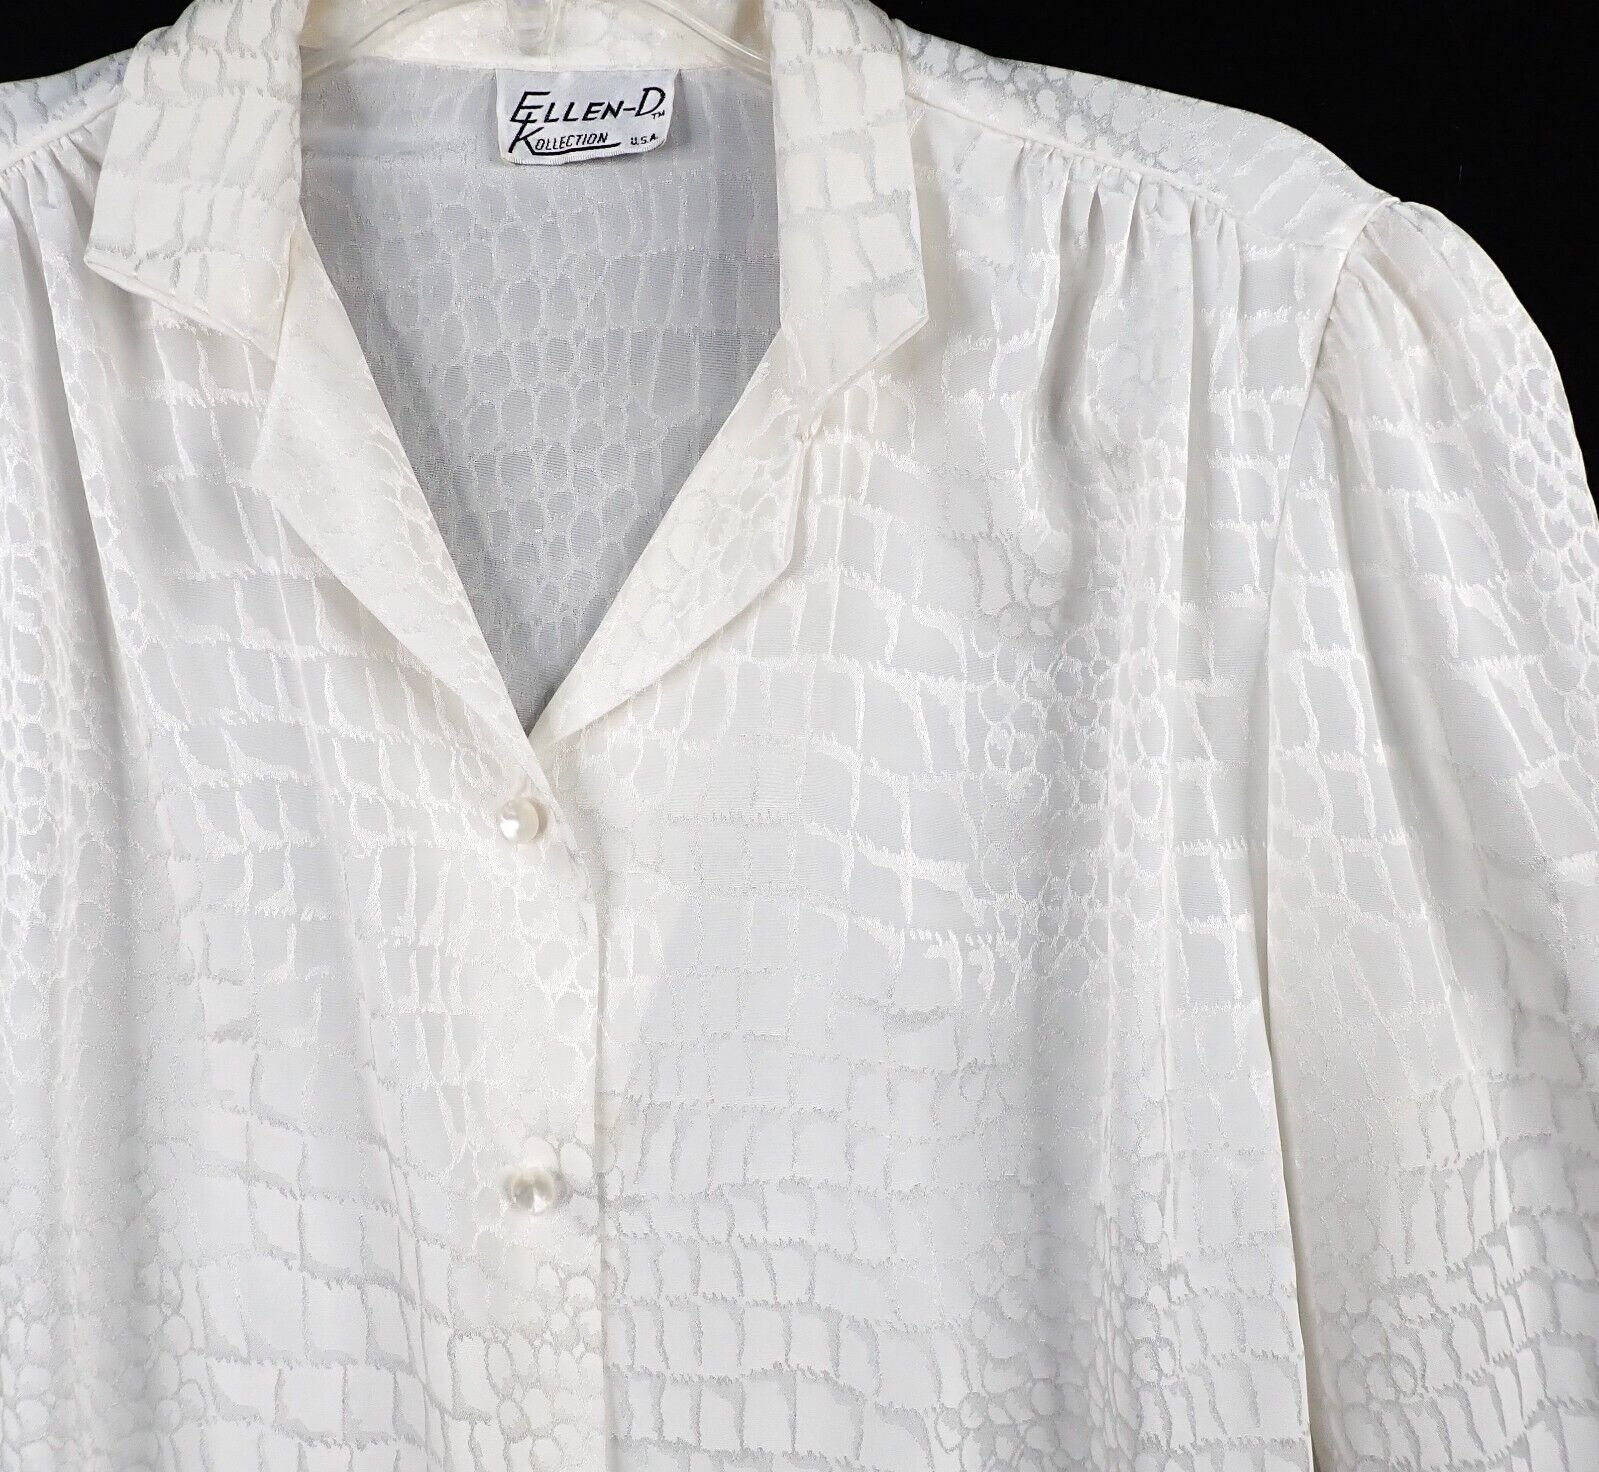 Vintage 80s Ellen D Kollection White Notch Collar… - image 2